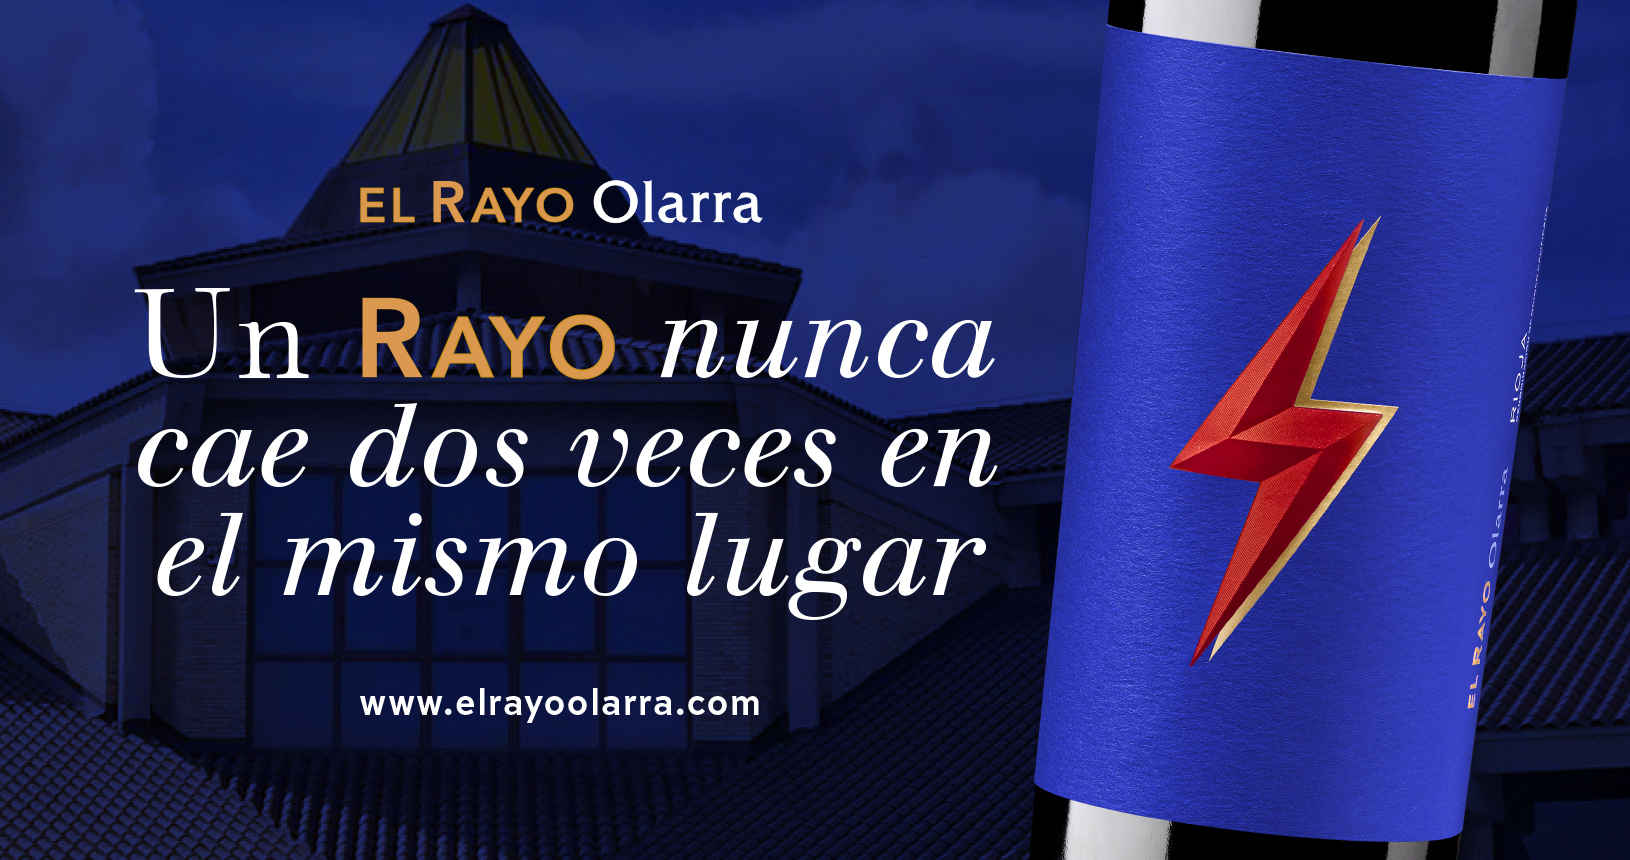 El Rayo Olarra